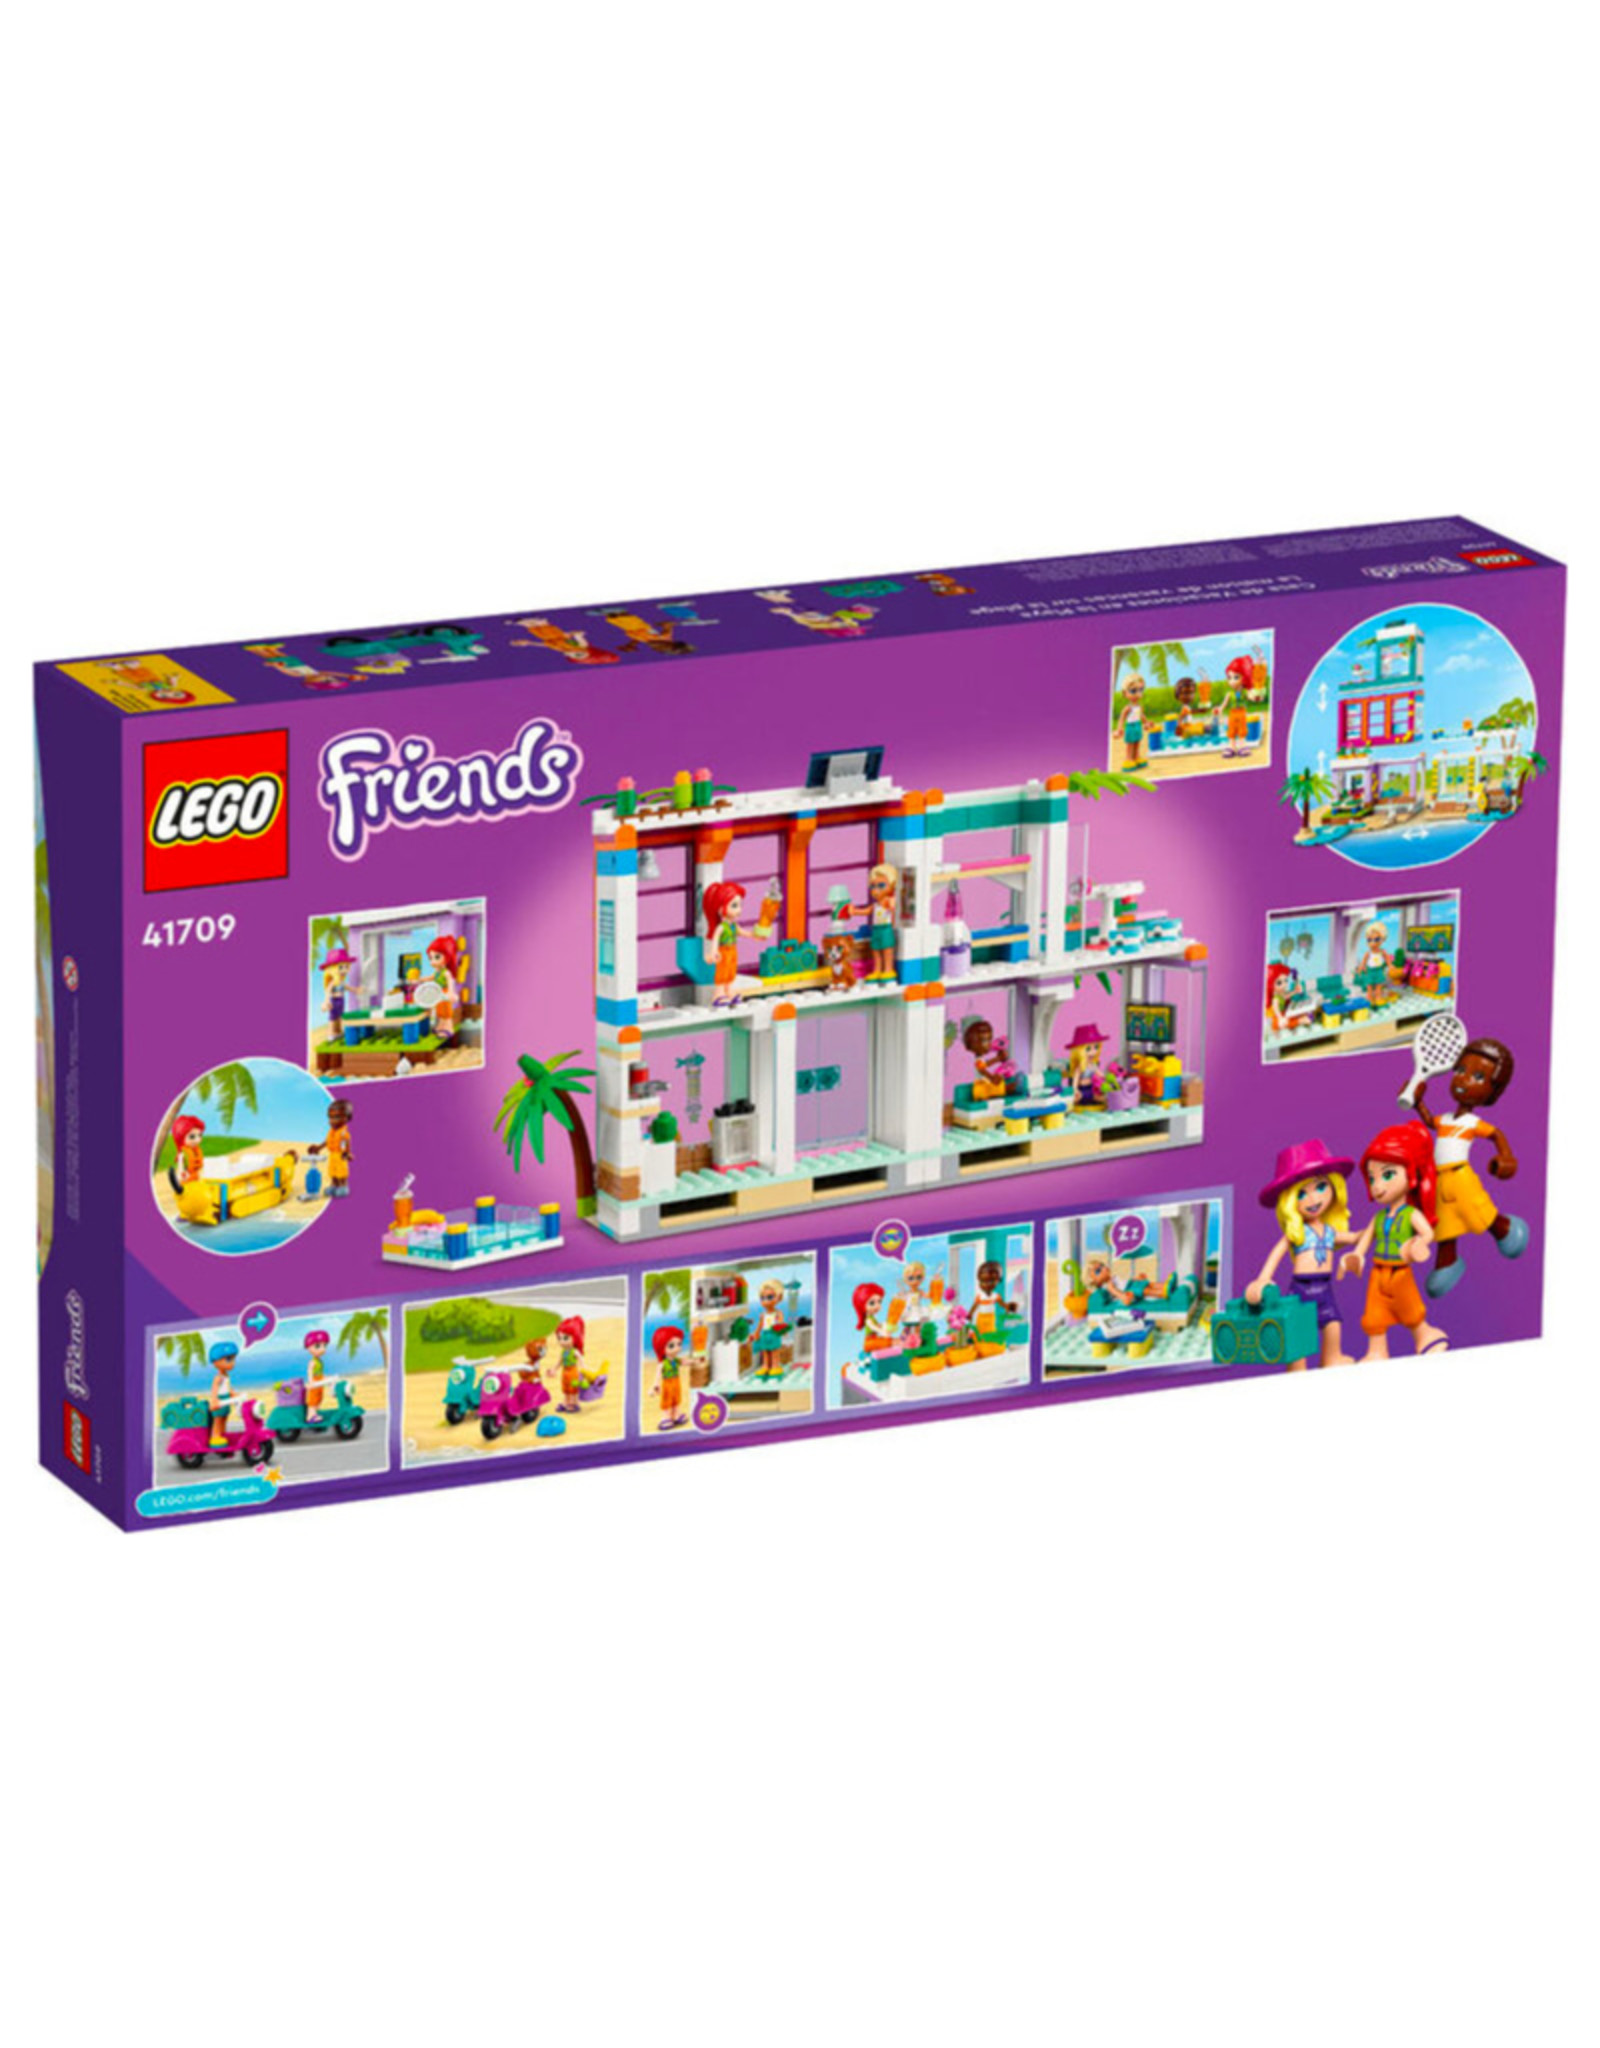 LEGO Friends 41709 Vacation Beach House